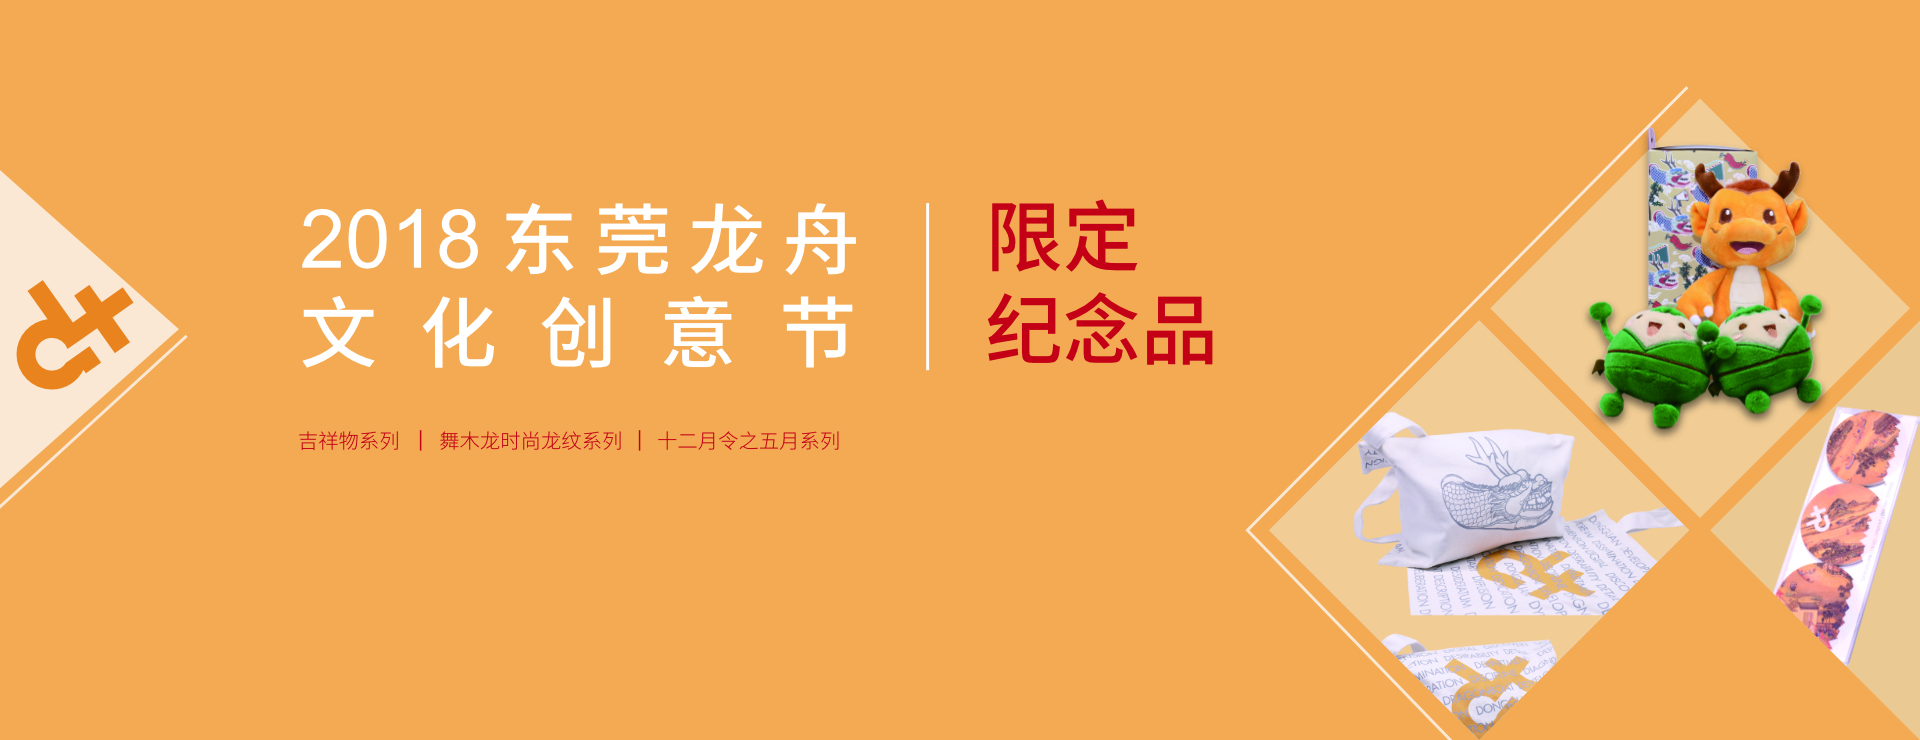 东莞市品牌创新中心-栏目banner